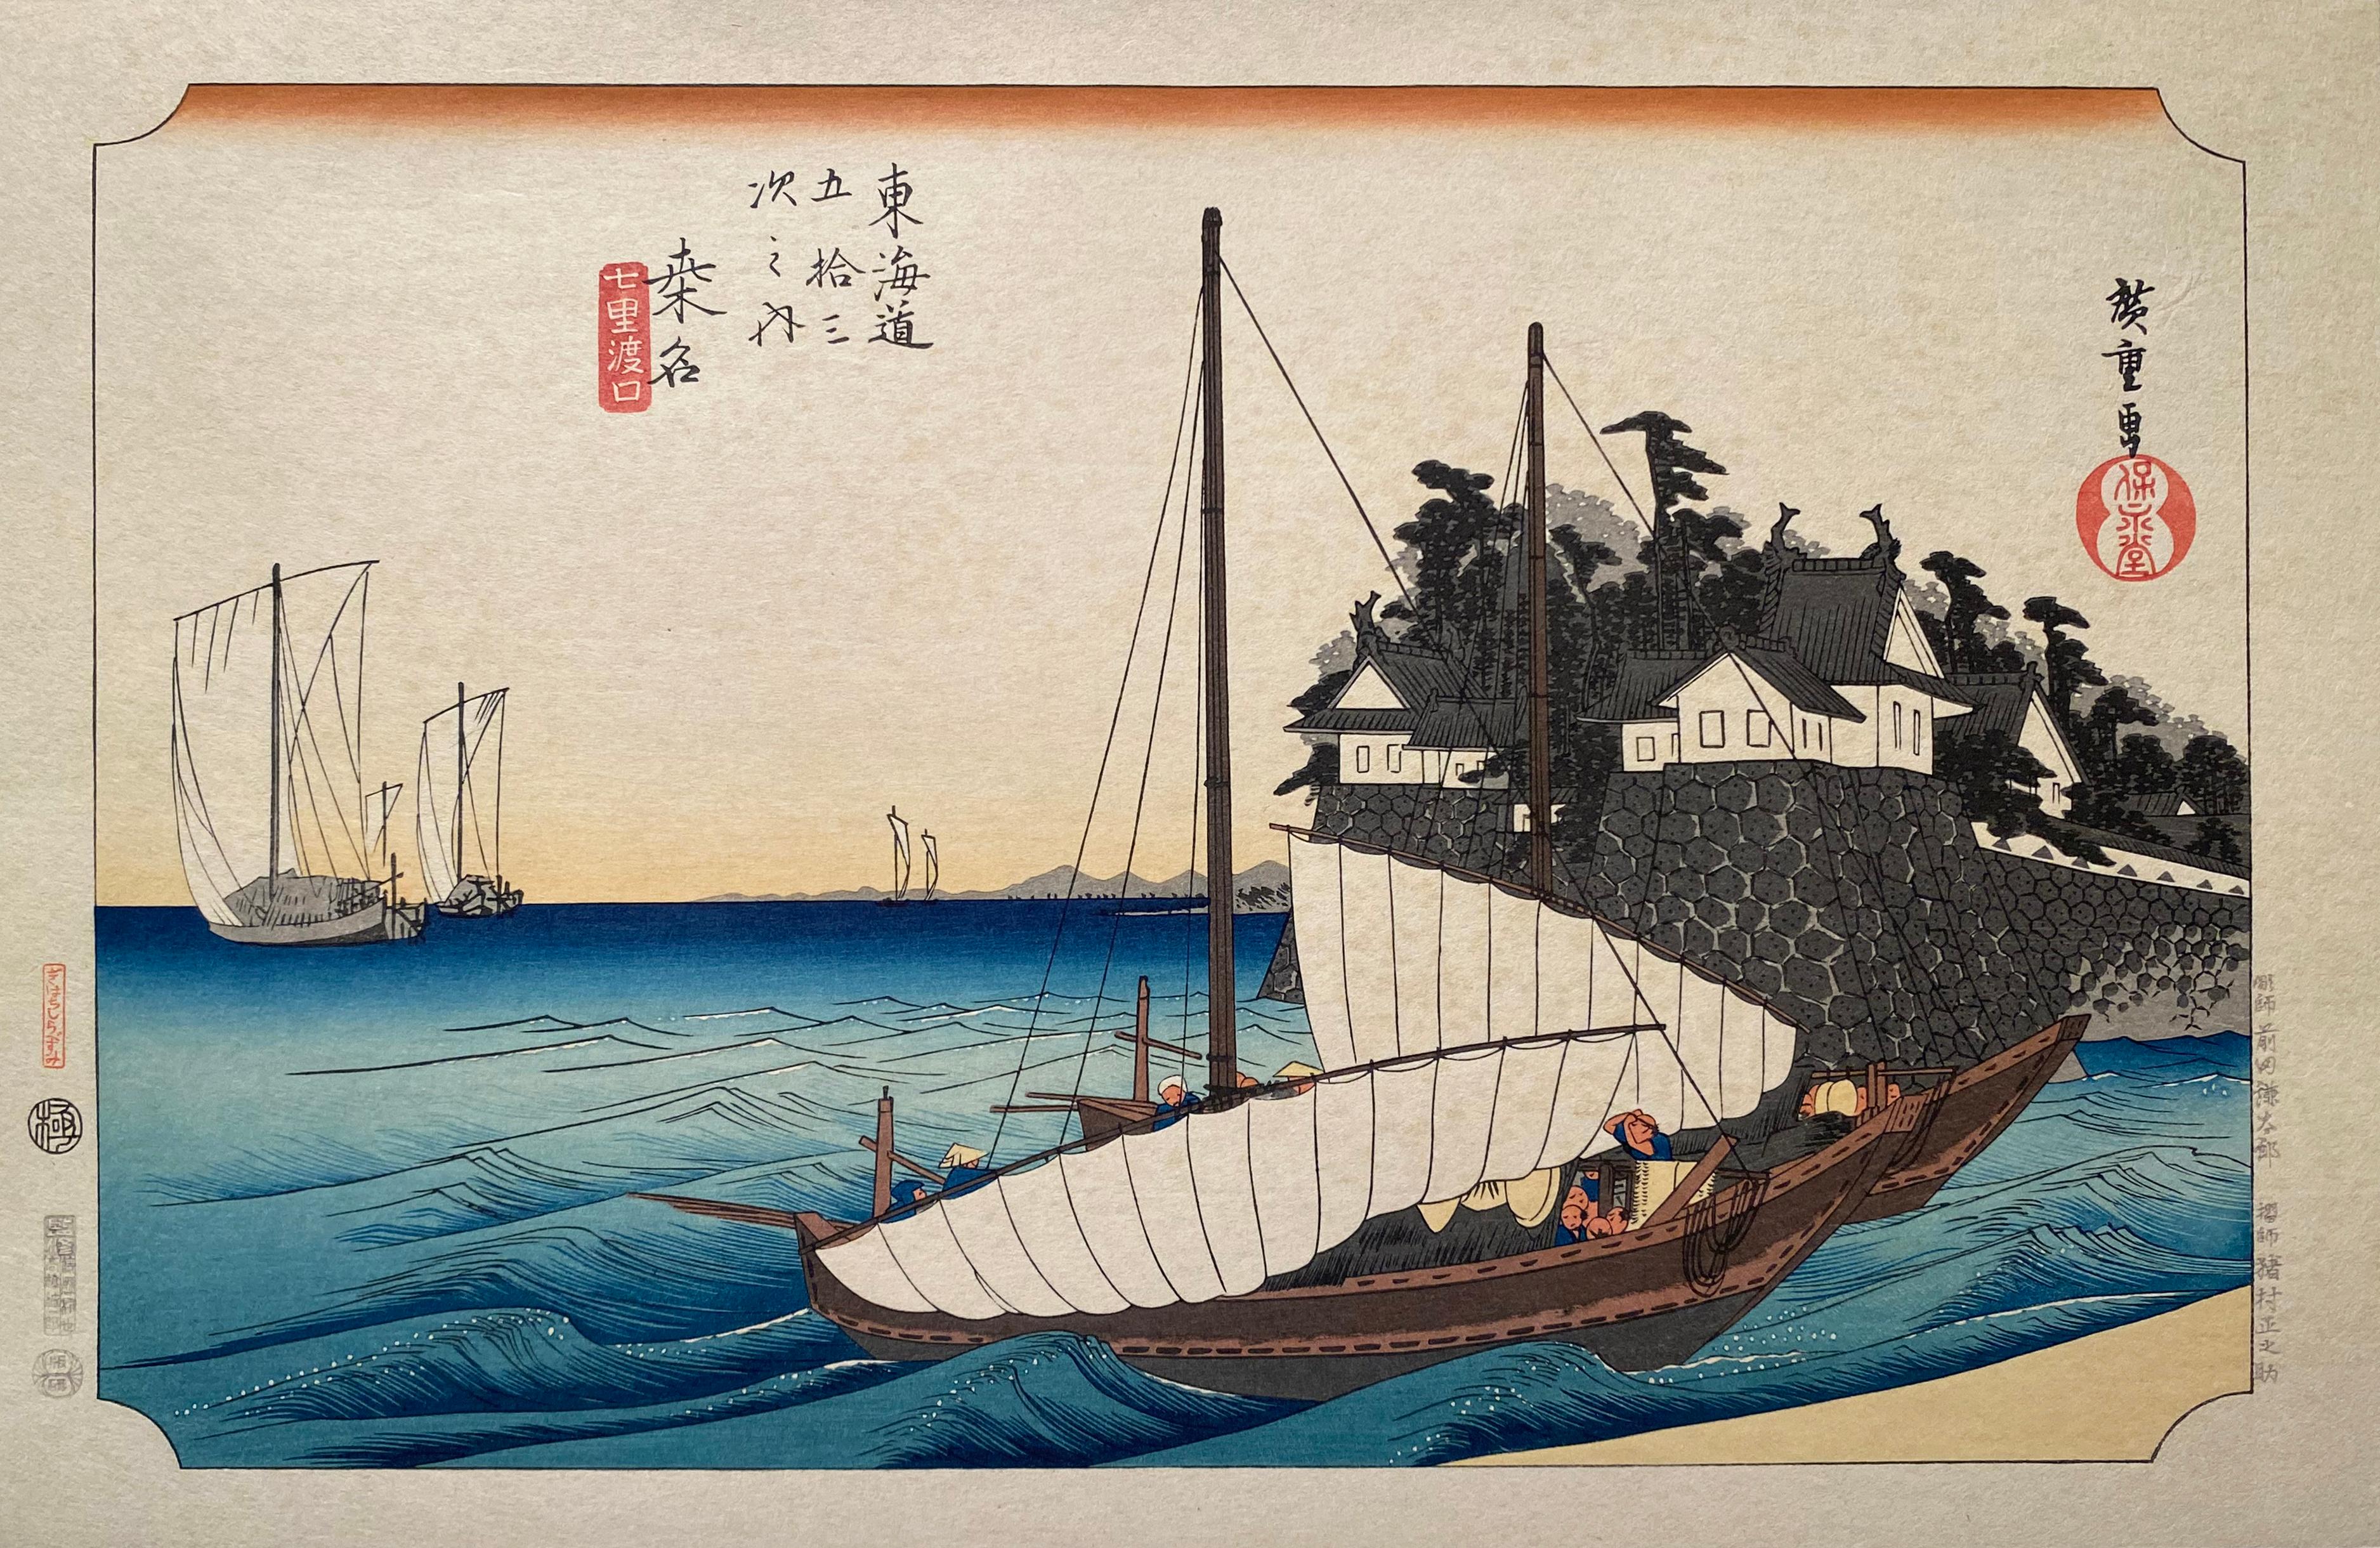 Utagawa Hiroshige (Ando Hiroshige) Landscape Print – Shichiri Ferry", nach Utagawa Hiroshige 歌川廣重, Ukiyo-e Holzschnitt, Tokaido